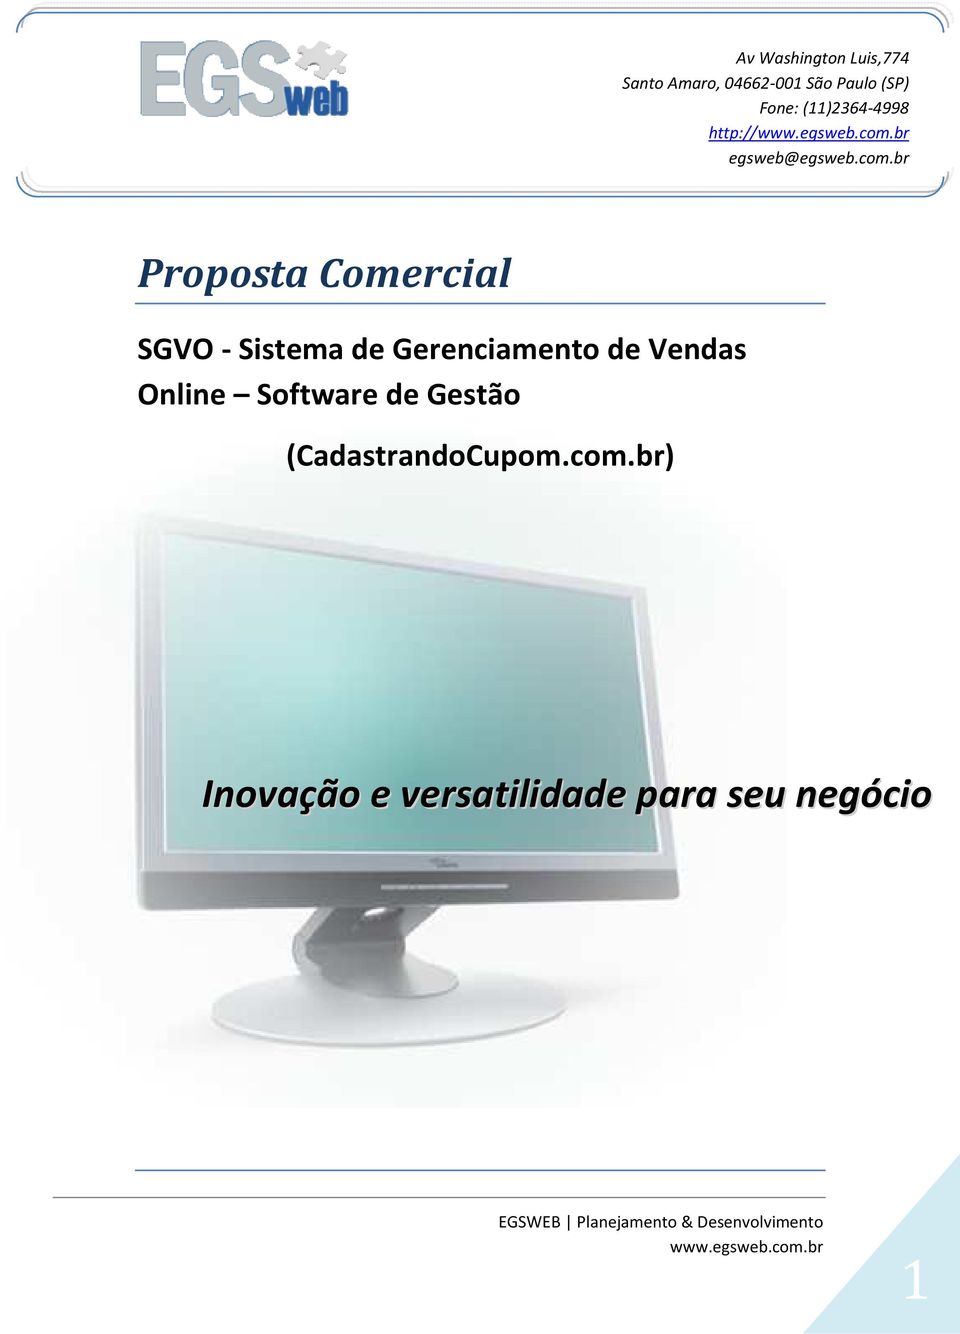 br Proposta Comercial SGVO - Sistema de Gerenciamento de Vendas